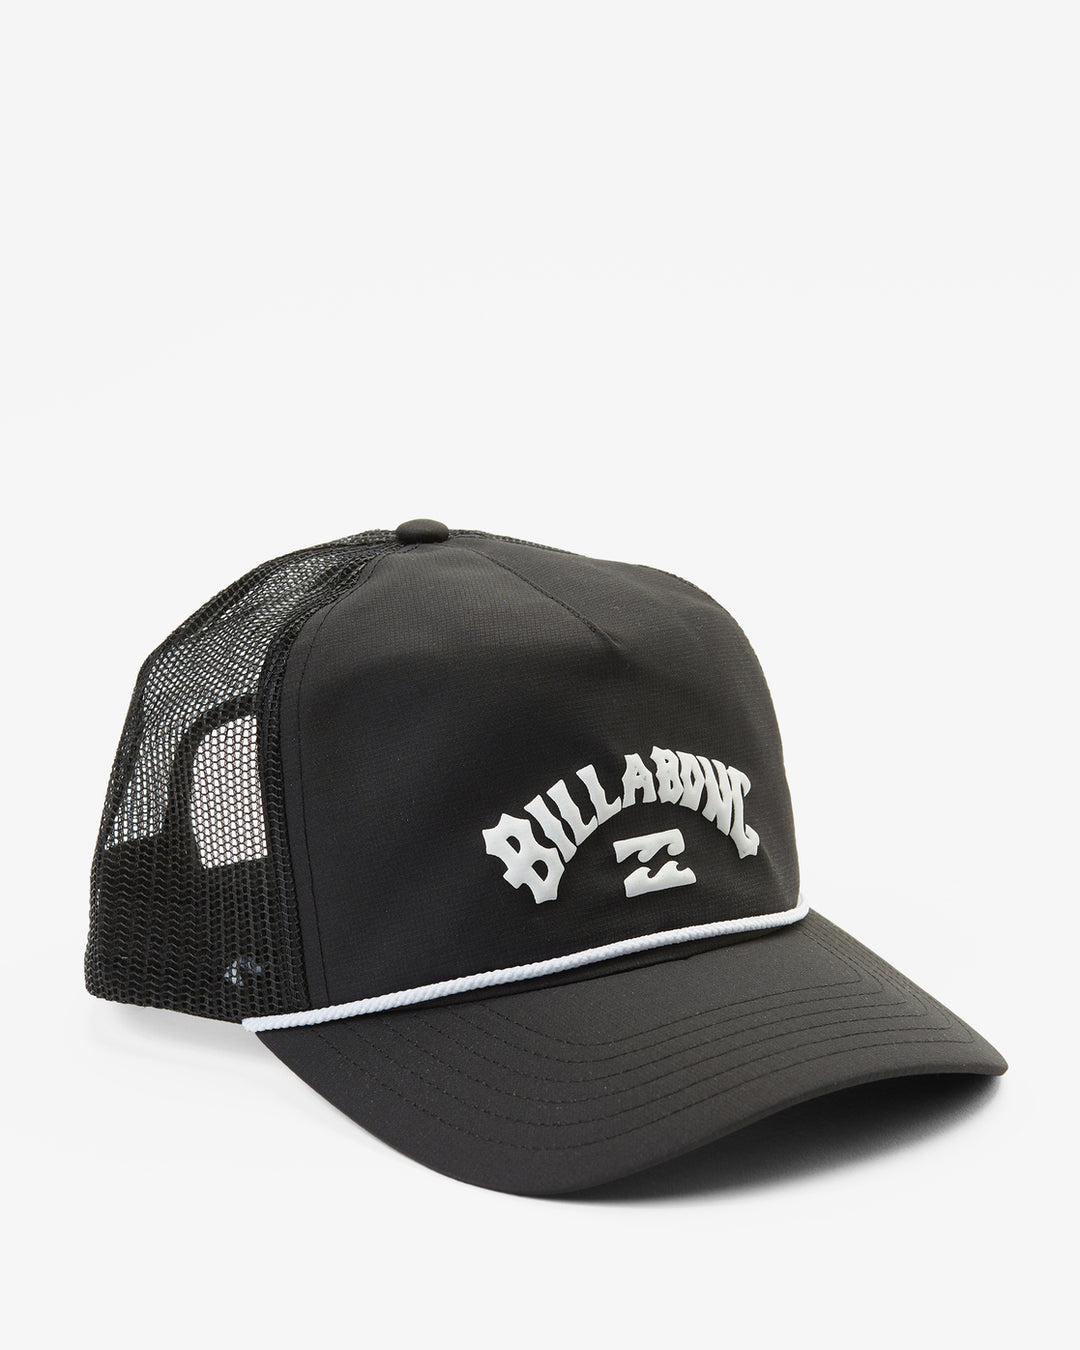 Billabong Boy's Arch Team Trucker Hat - Black - Sun Diego Boardshop